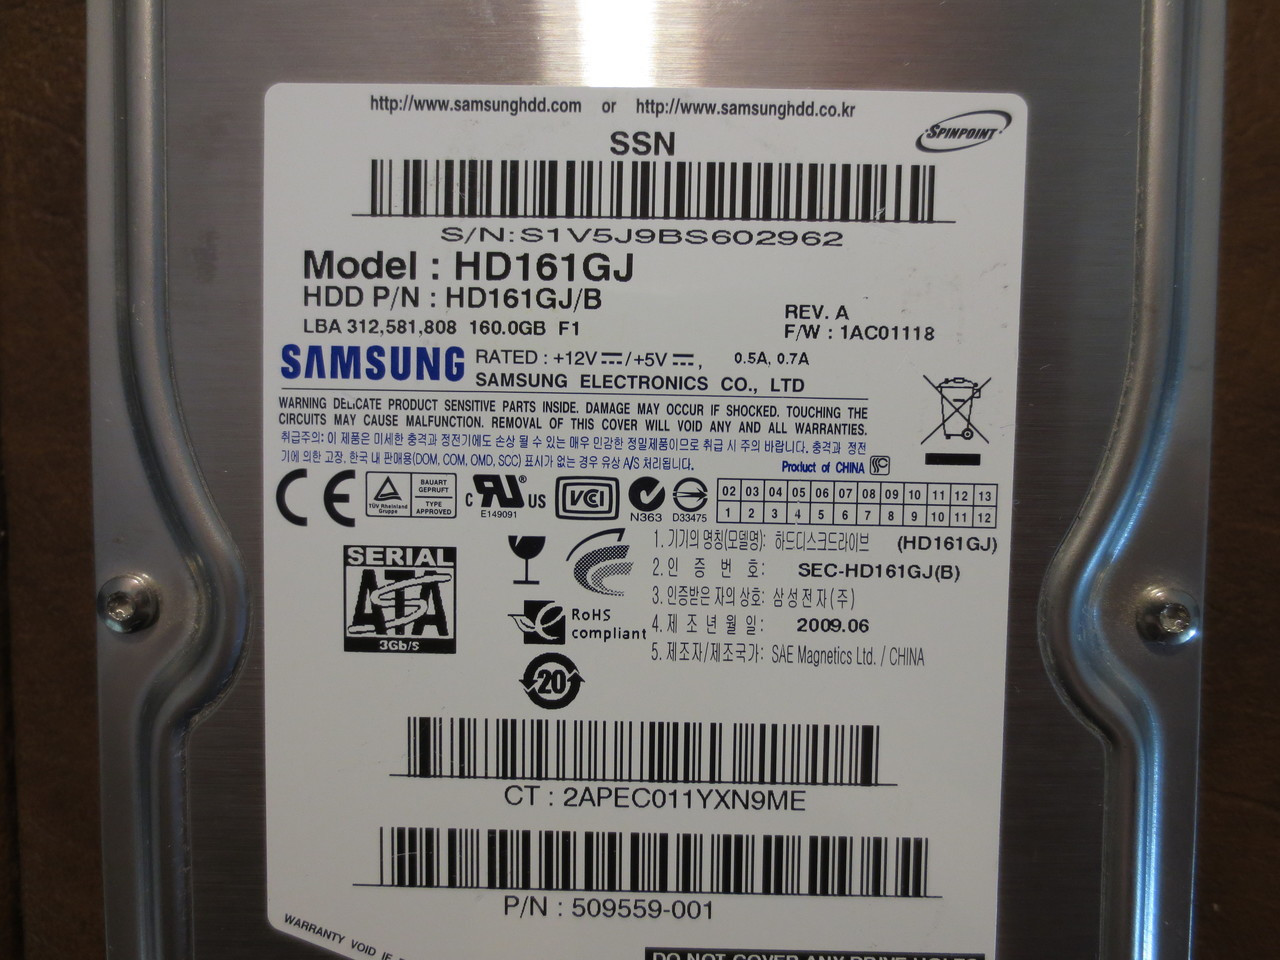 Samsung HD161GJ HD161GJ/B SSN REV.A FW:1AC01118 160gb Sata - Effective  Electronics